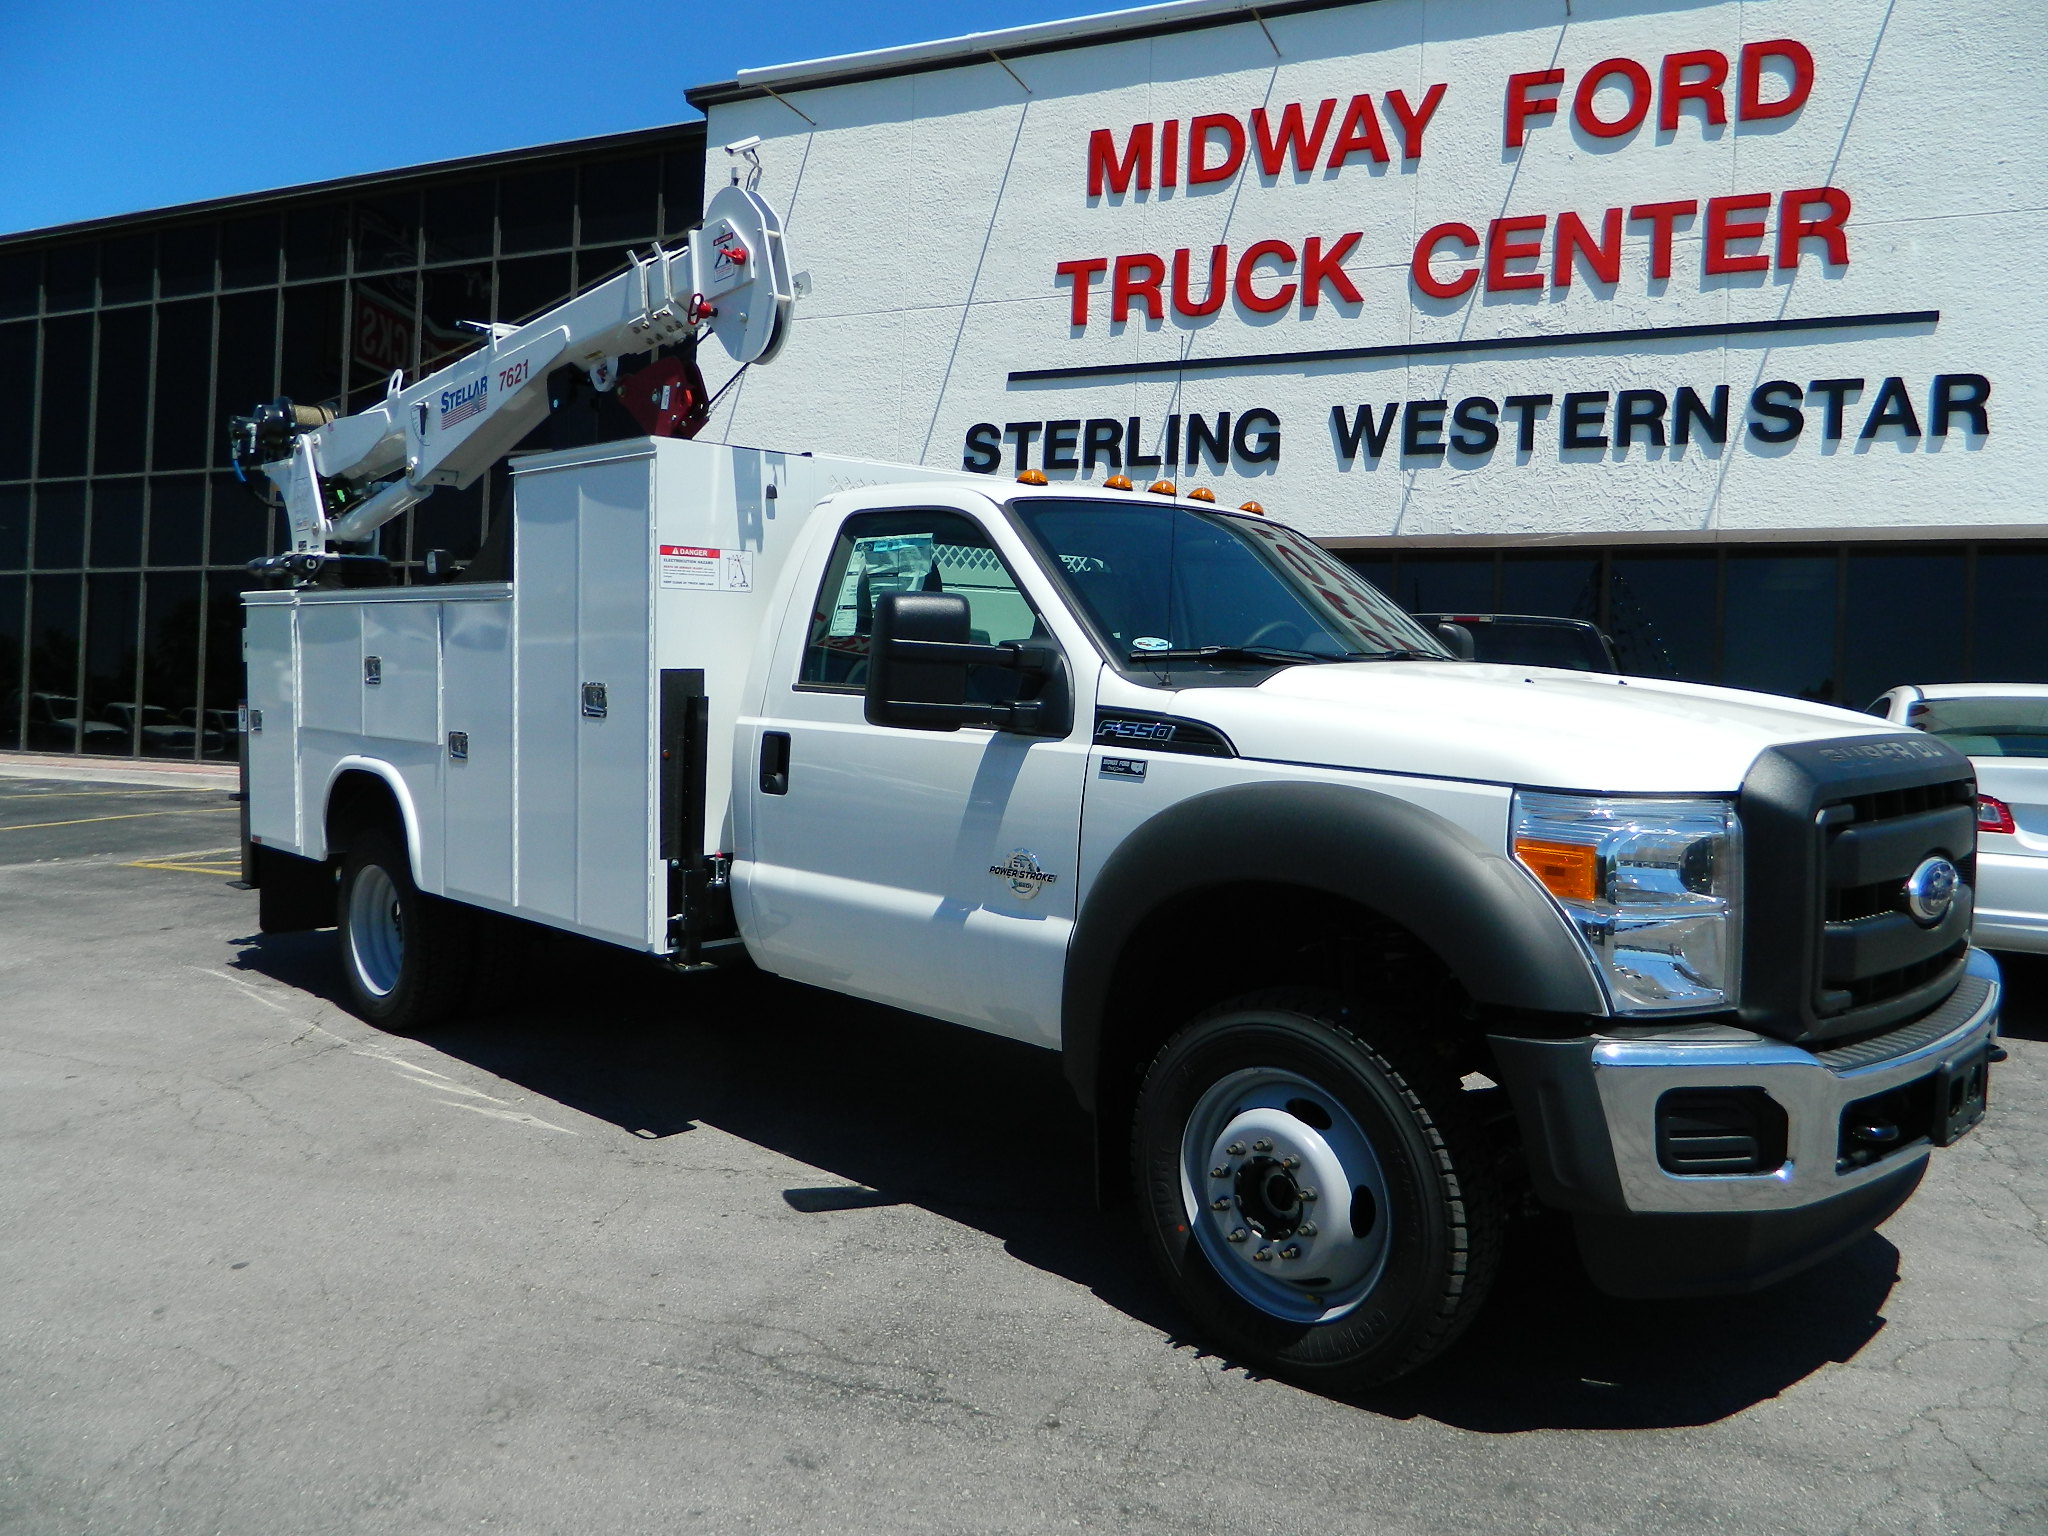 Midway ford truck center kansas city